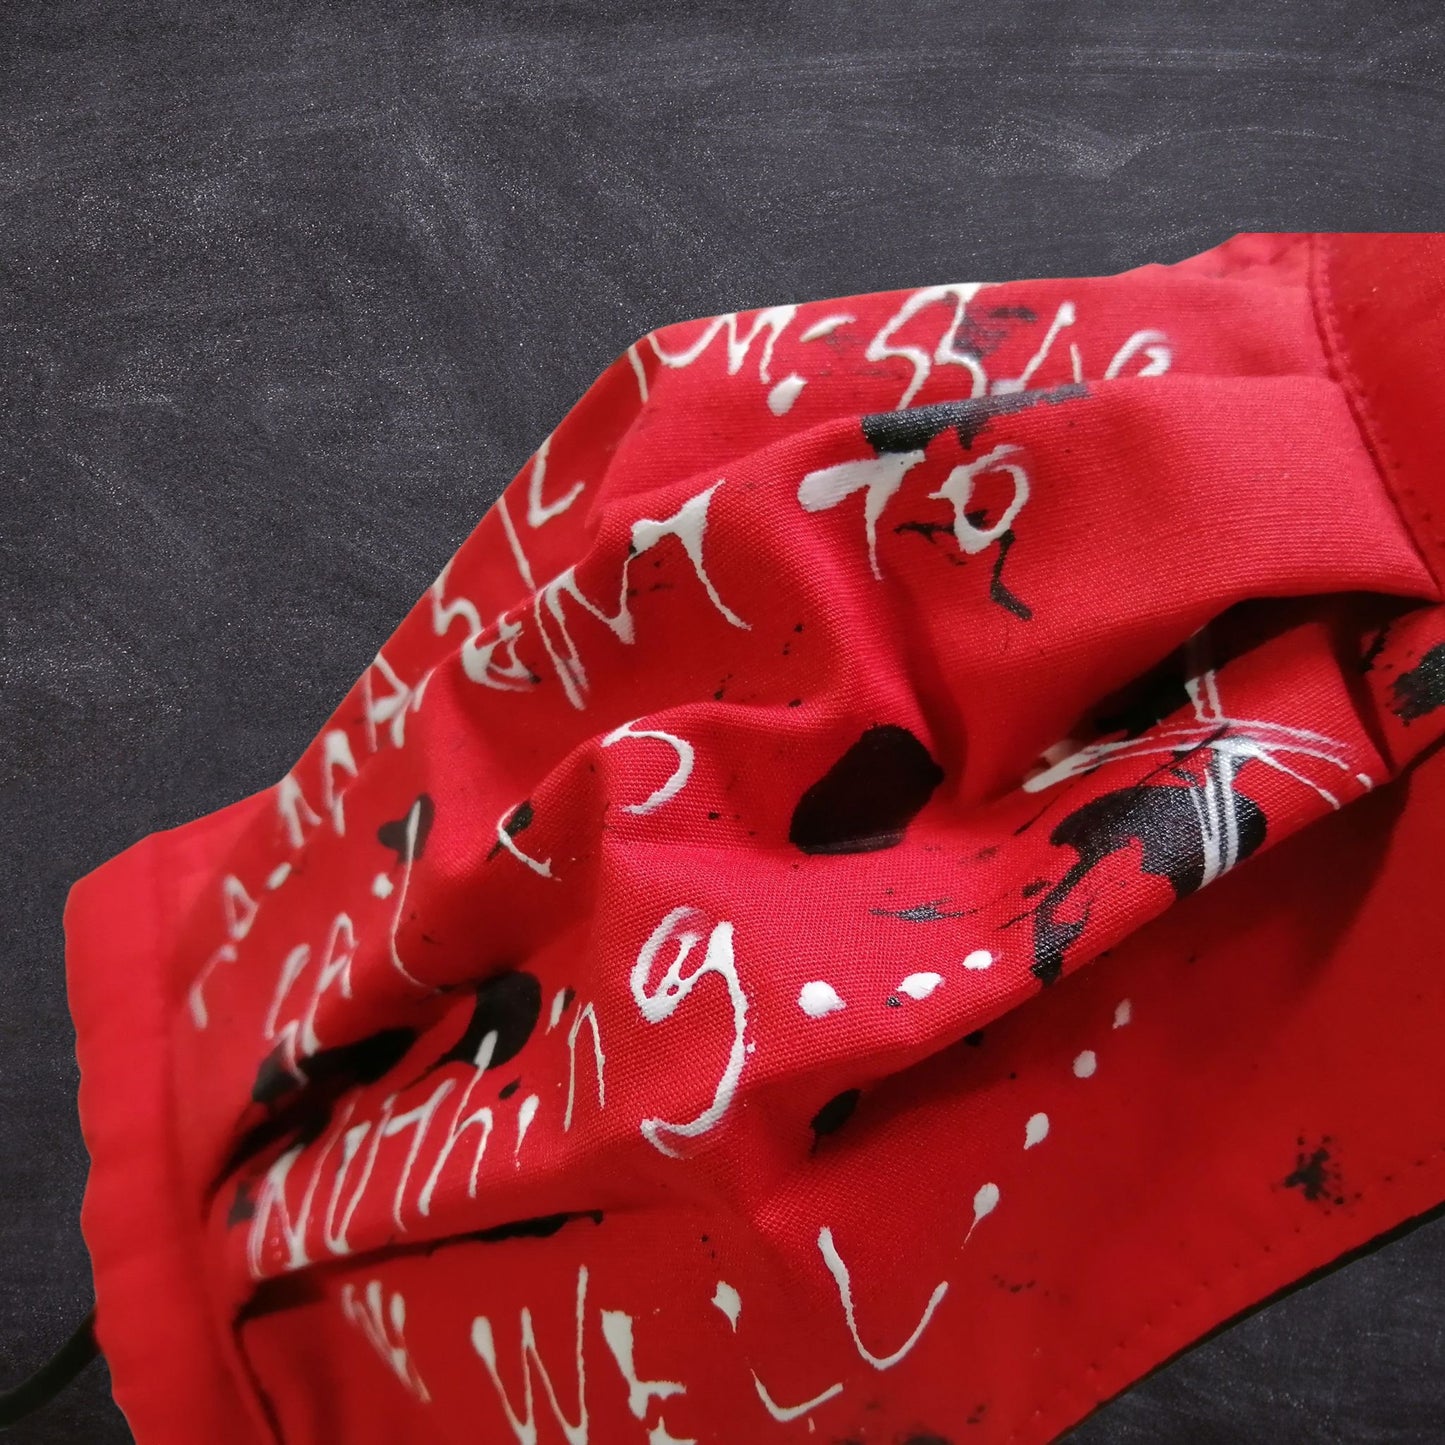 Punk Handwriting Design Bright Red Fashion Mask Handmade